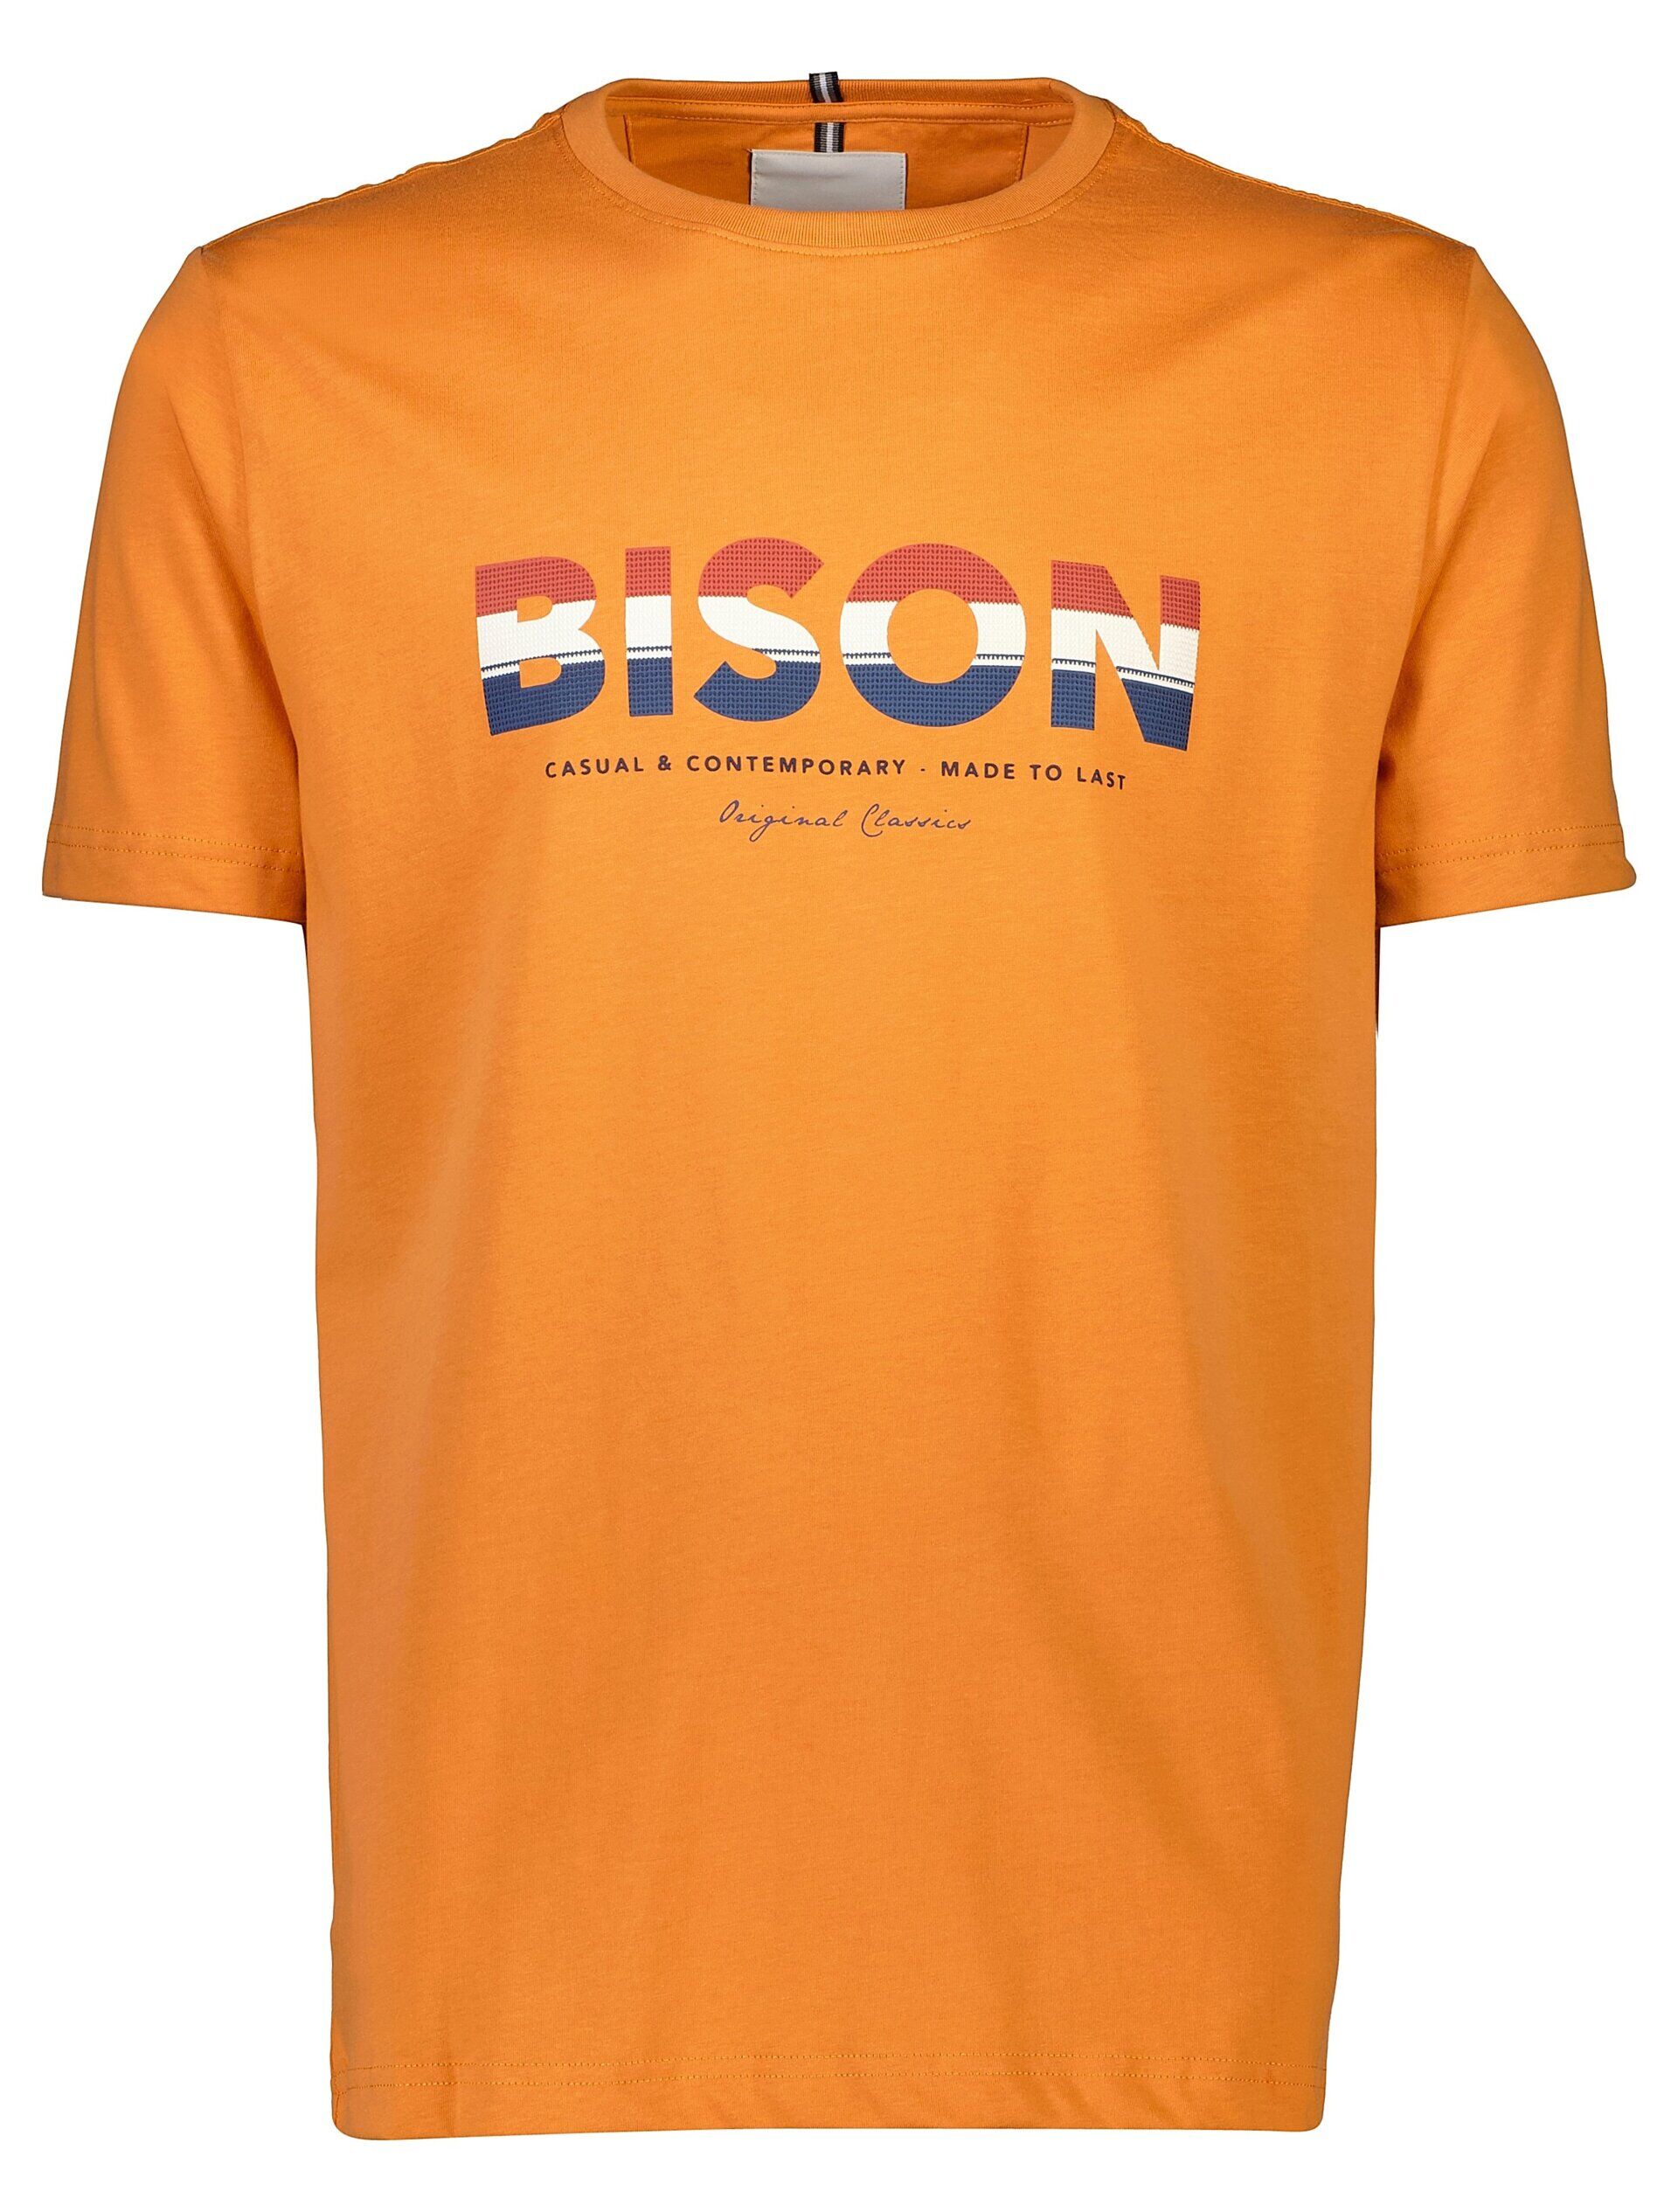 Bison  T-shirt 80-400113PLUS